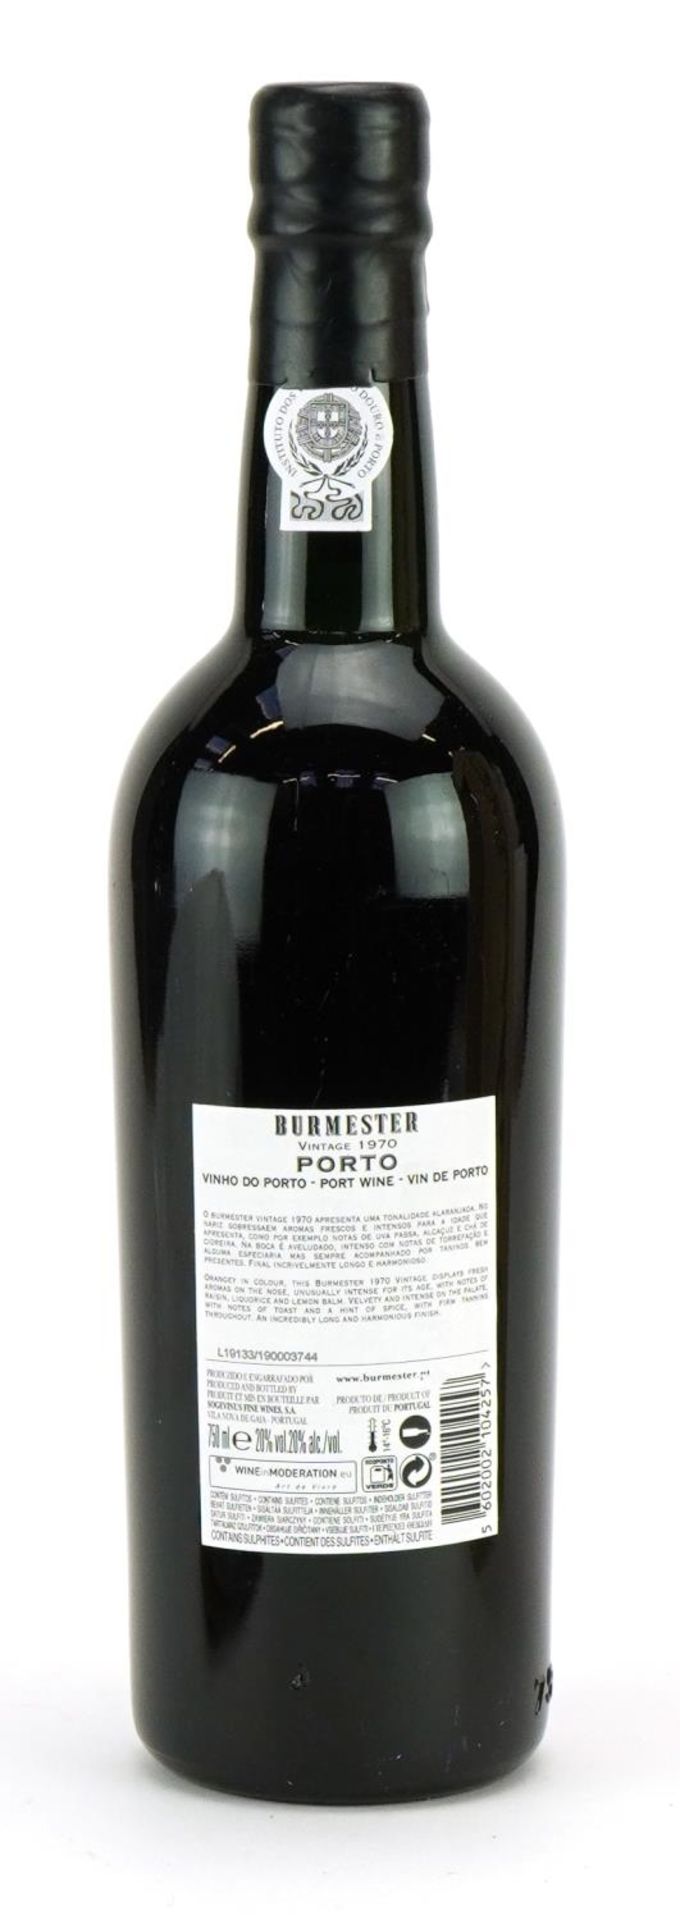 Bottle of 1970 Burmester vintage port with pine crate - Image 2 of 4